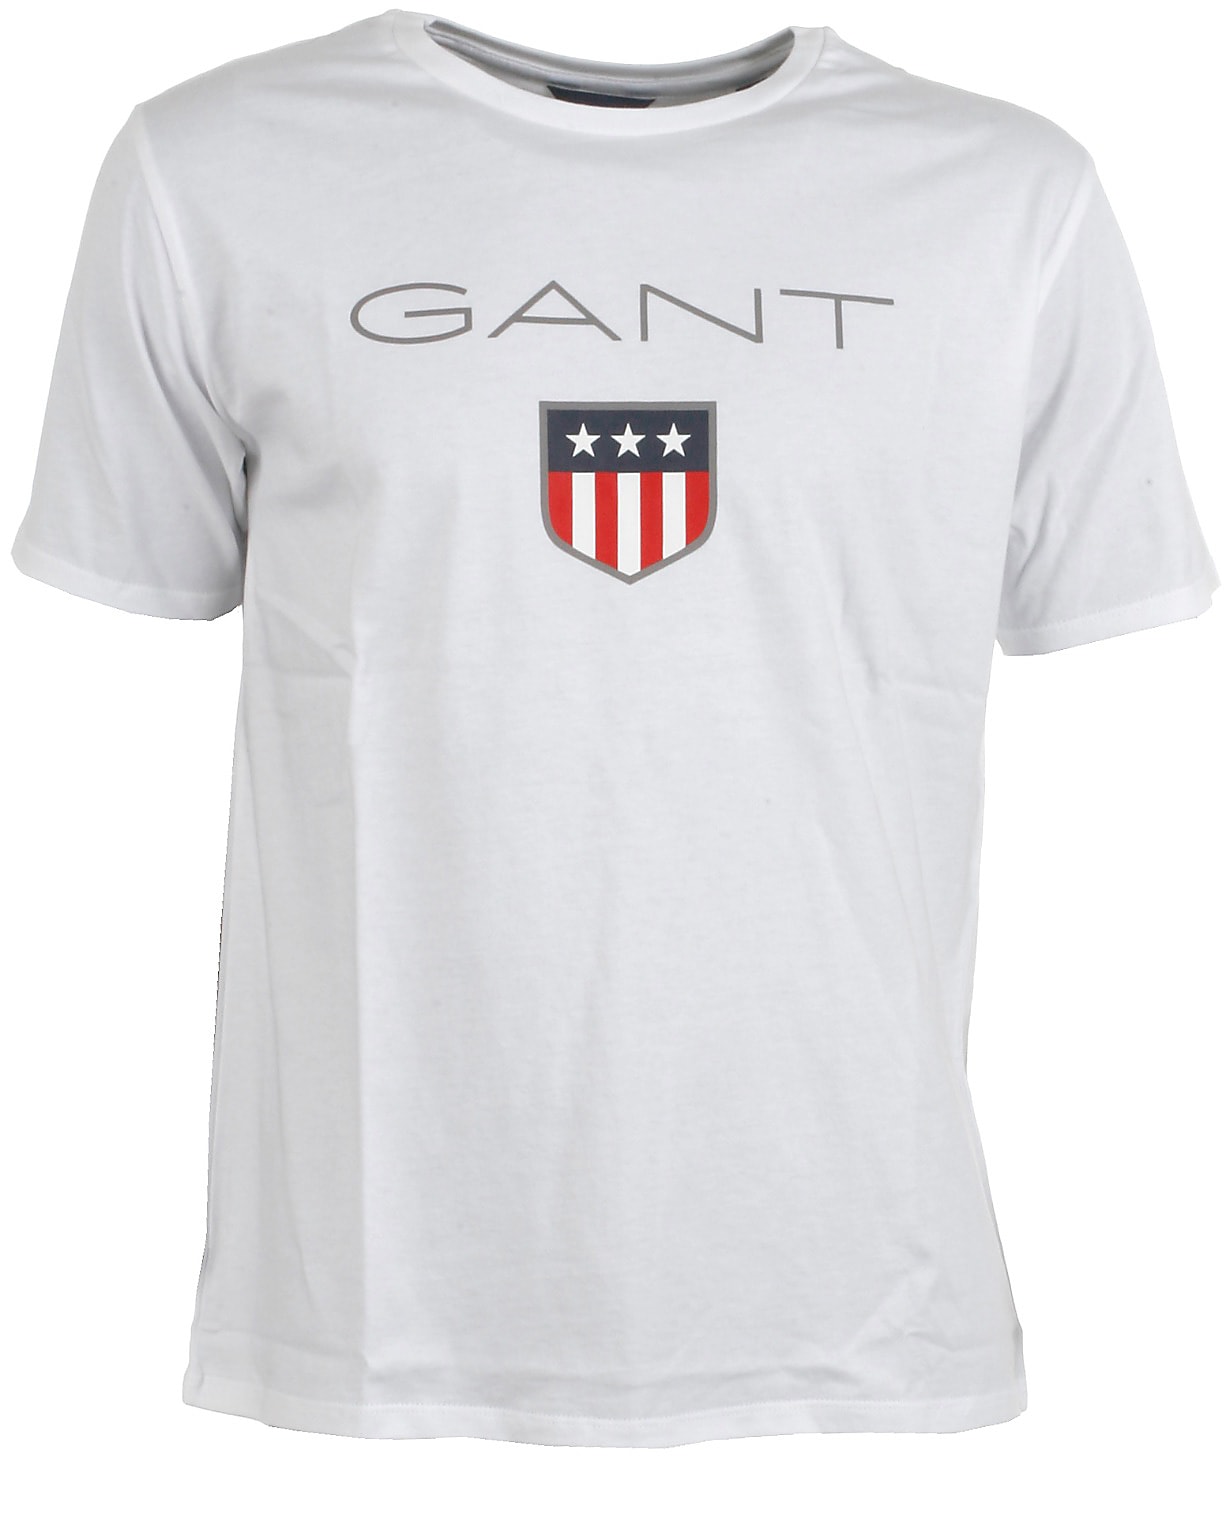 Gant t-shirt s/s